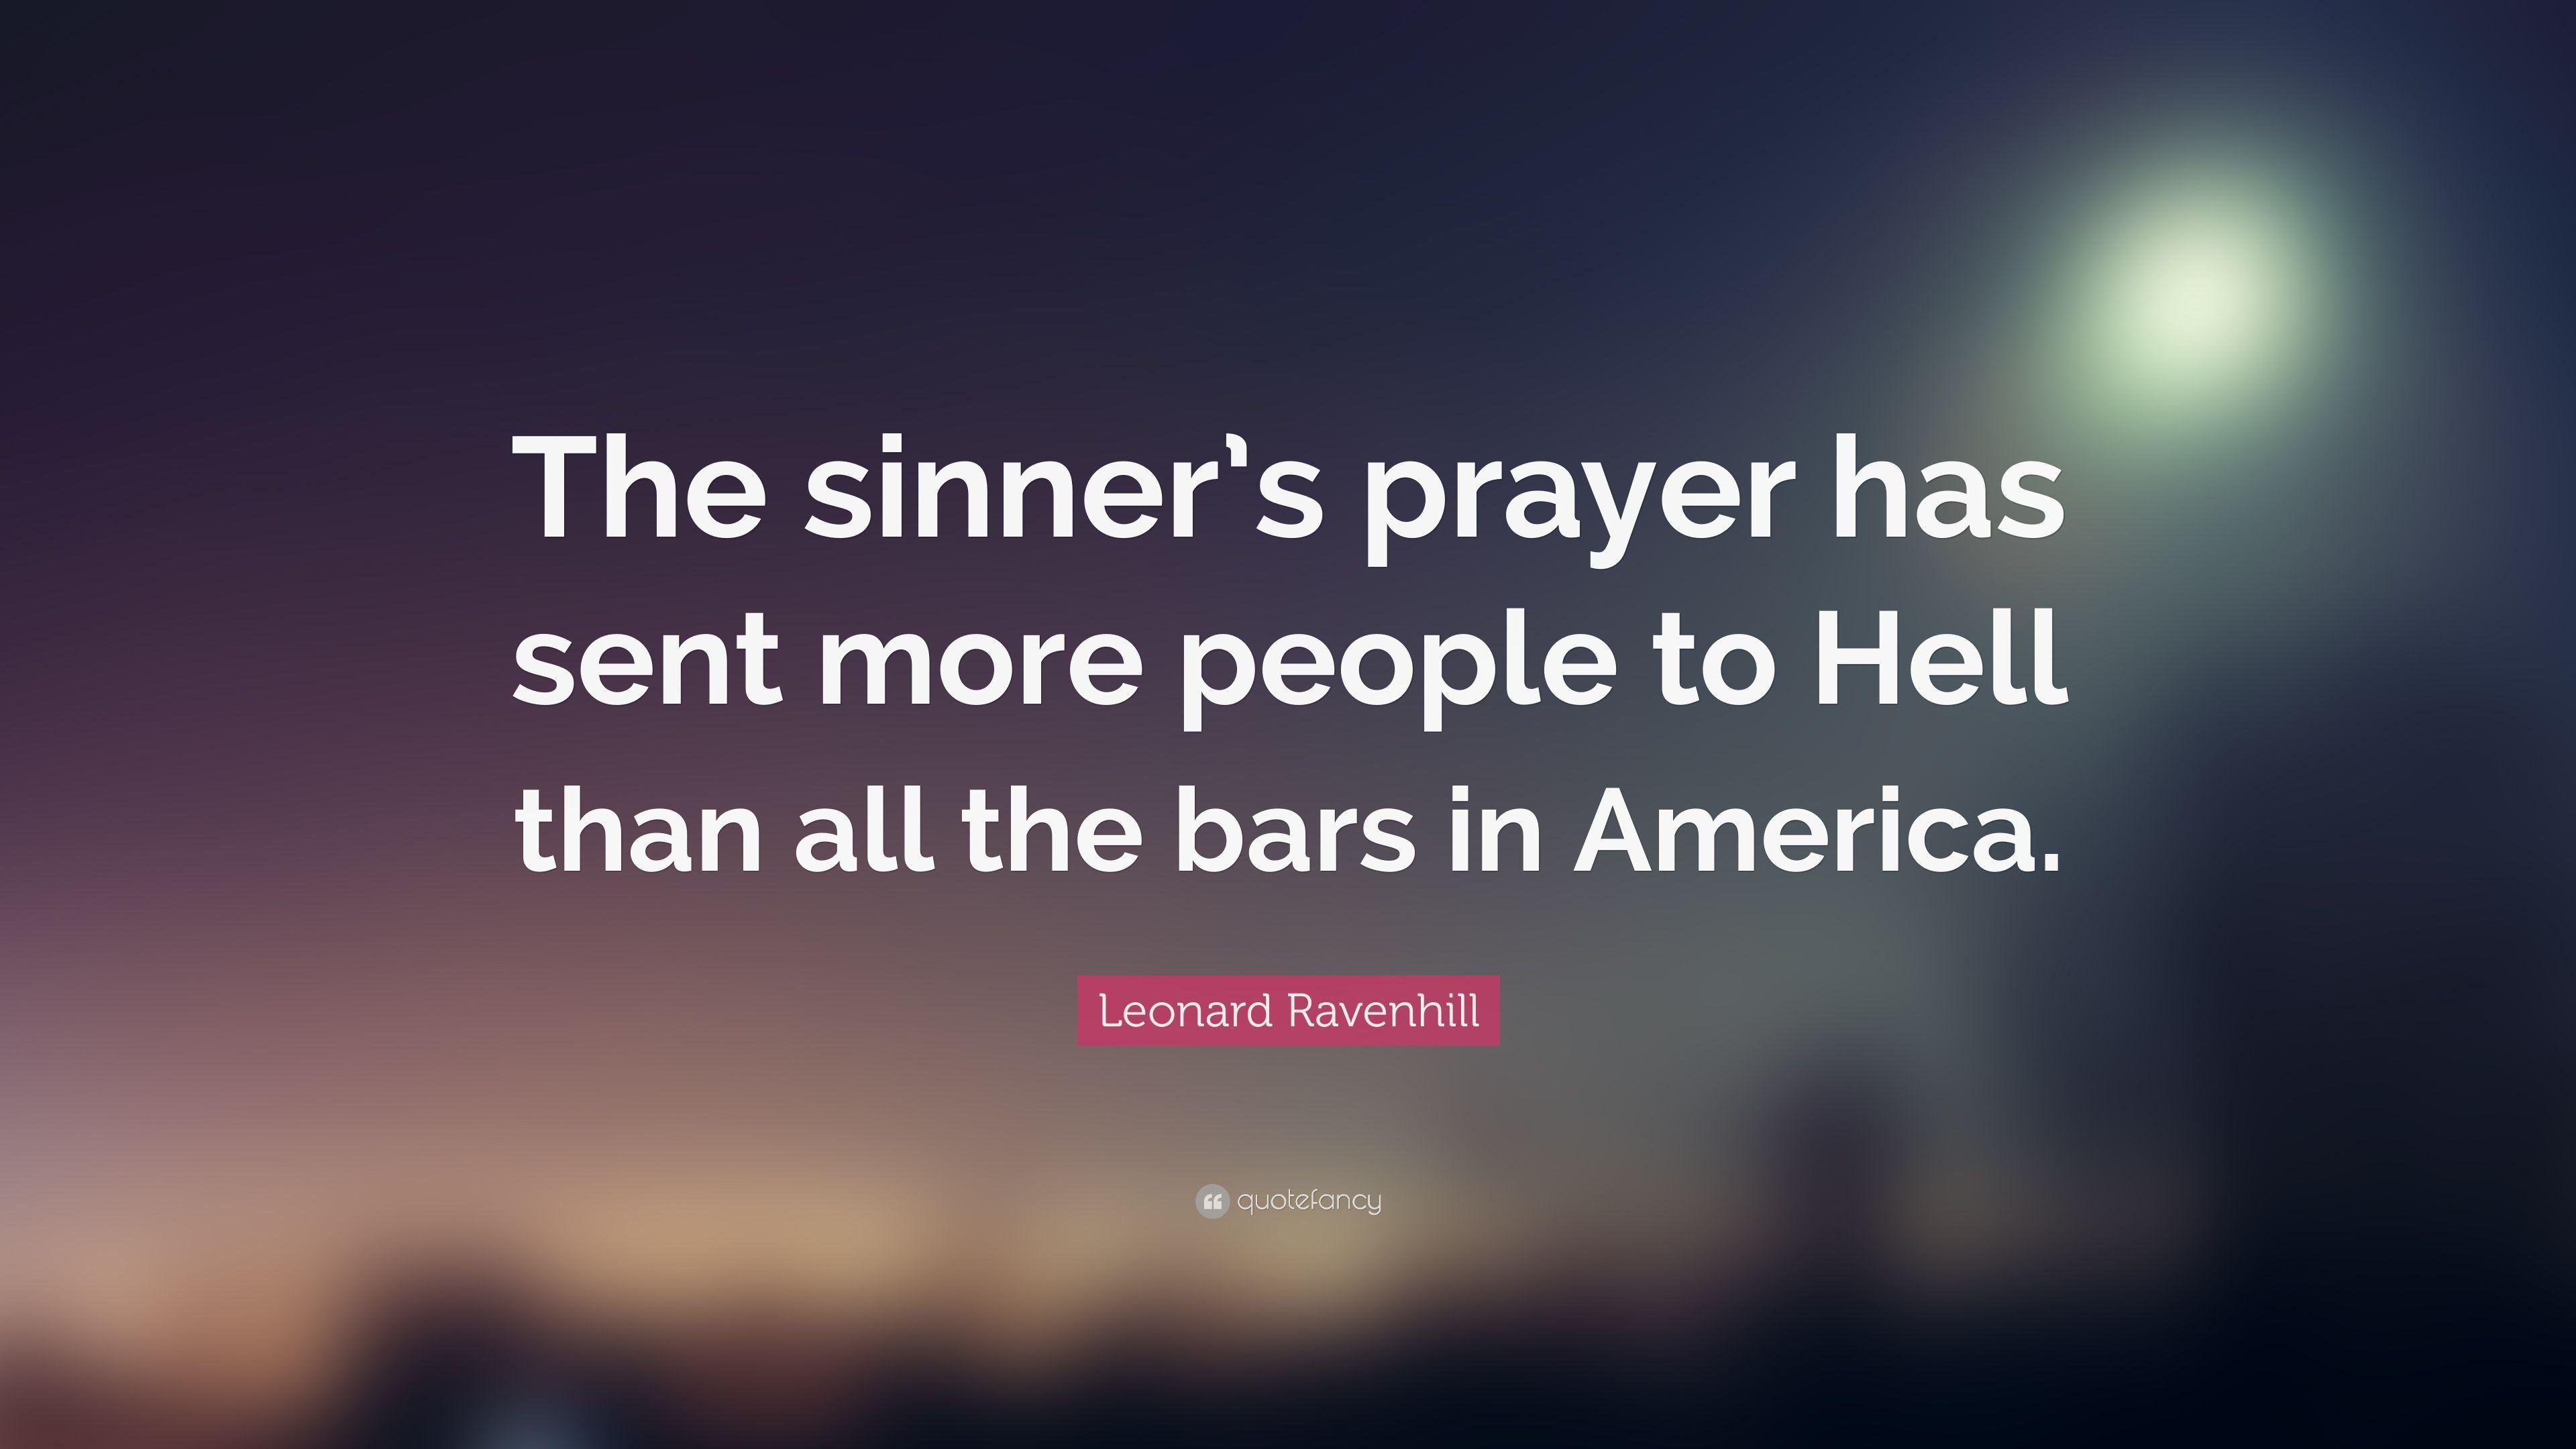 Leonard Ravenhill Quote: “The sinner's prayer has sent more people